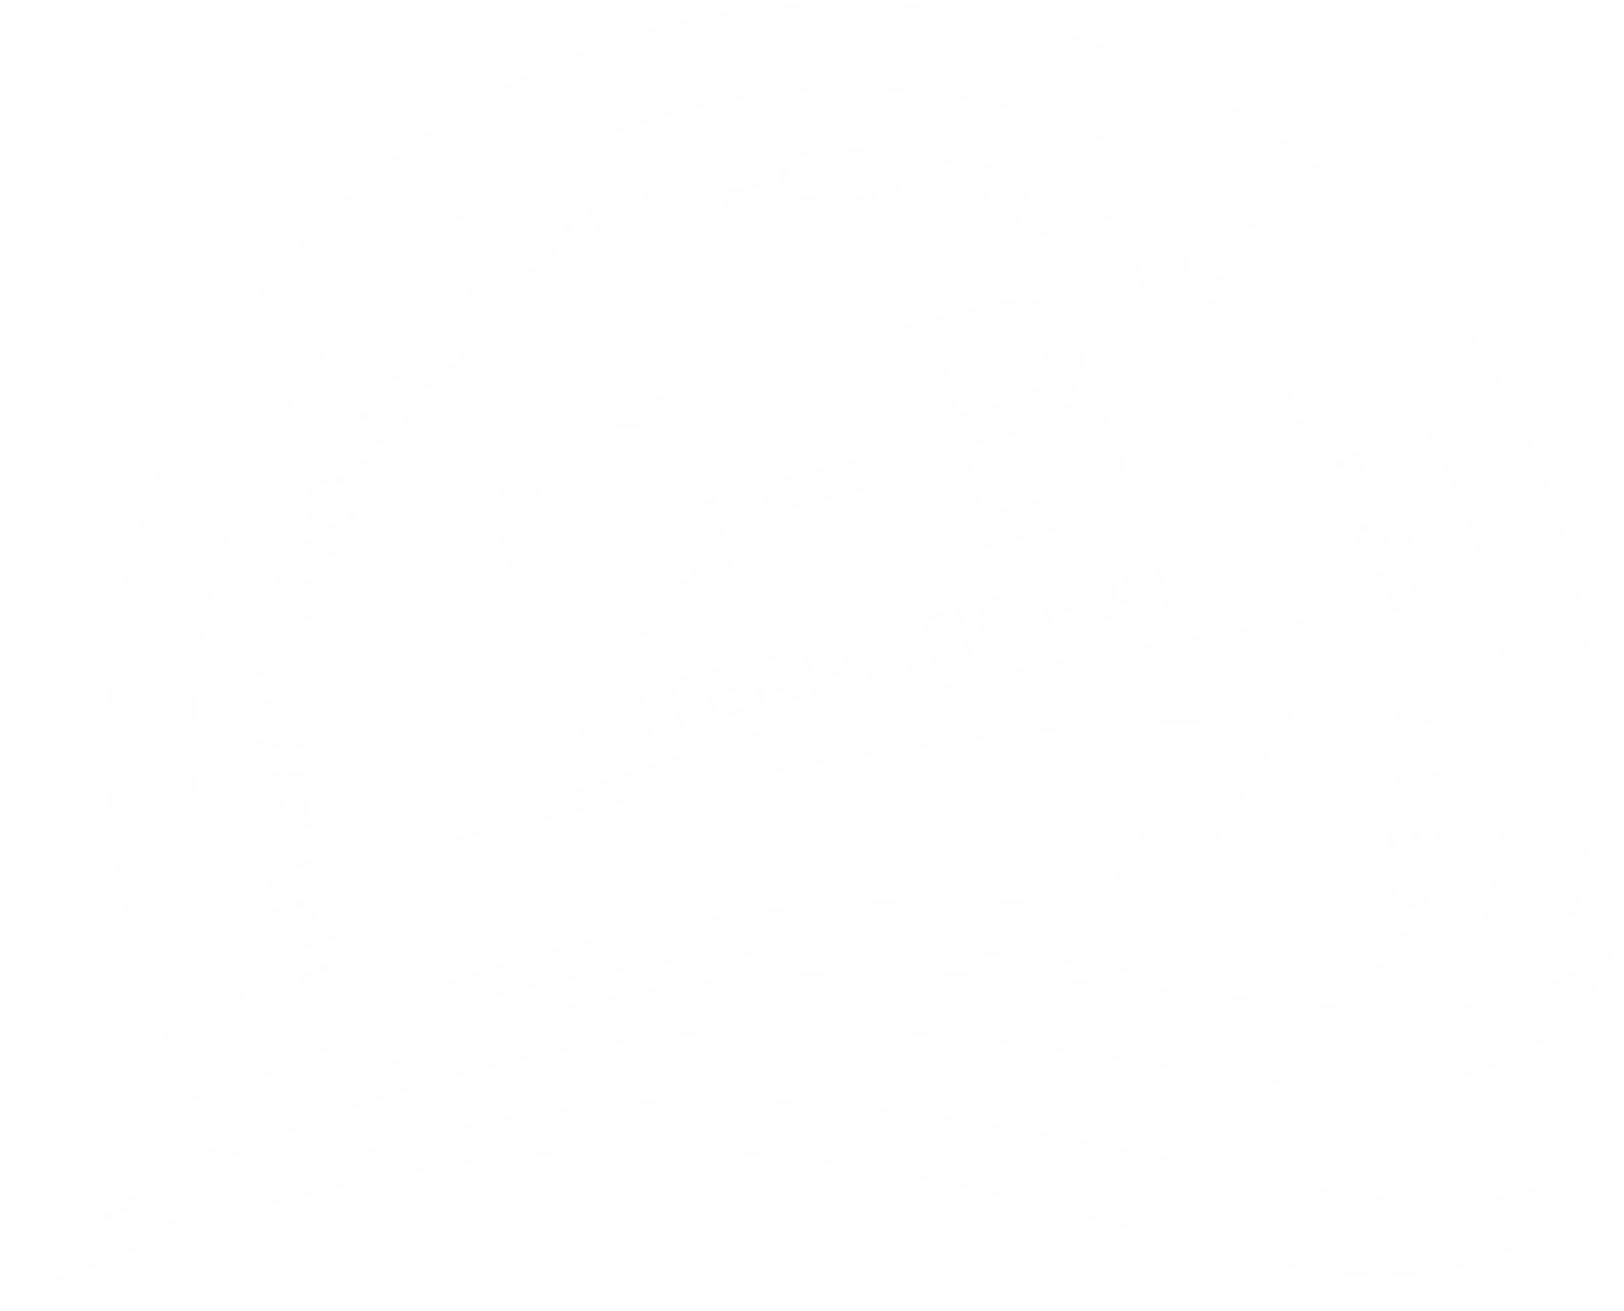 G-B INTERNATIONAL